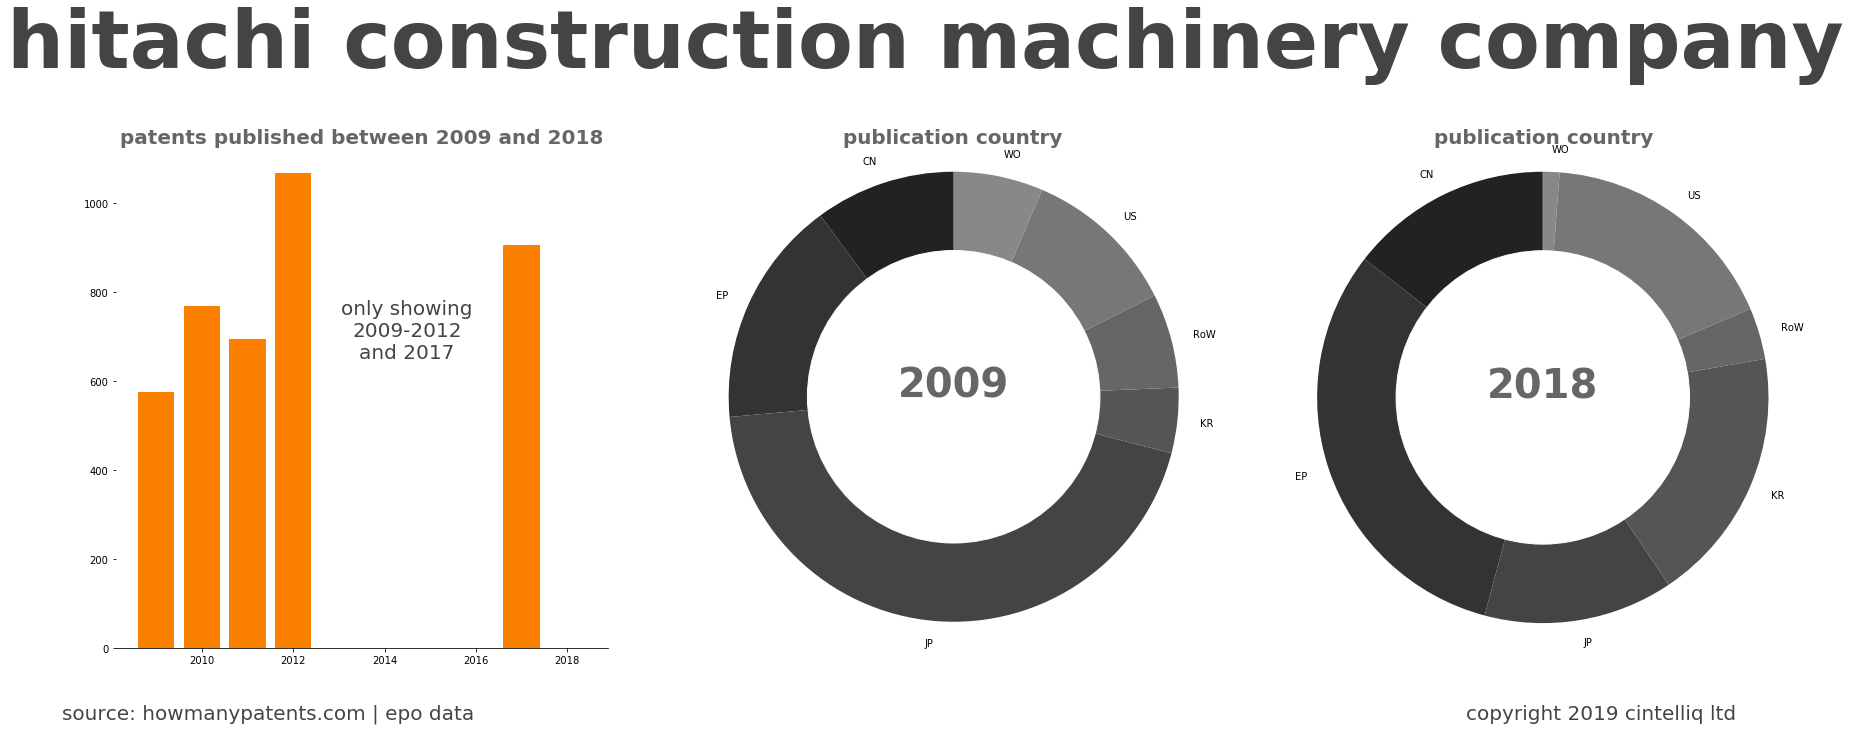 summary of patents for Hitachi Construction Machinery Company